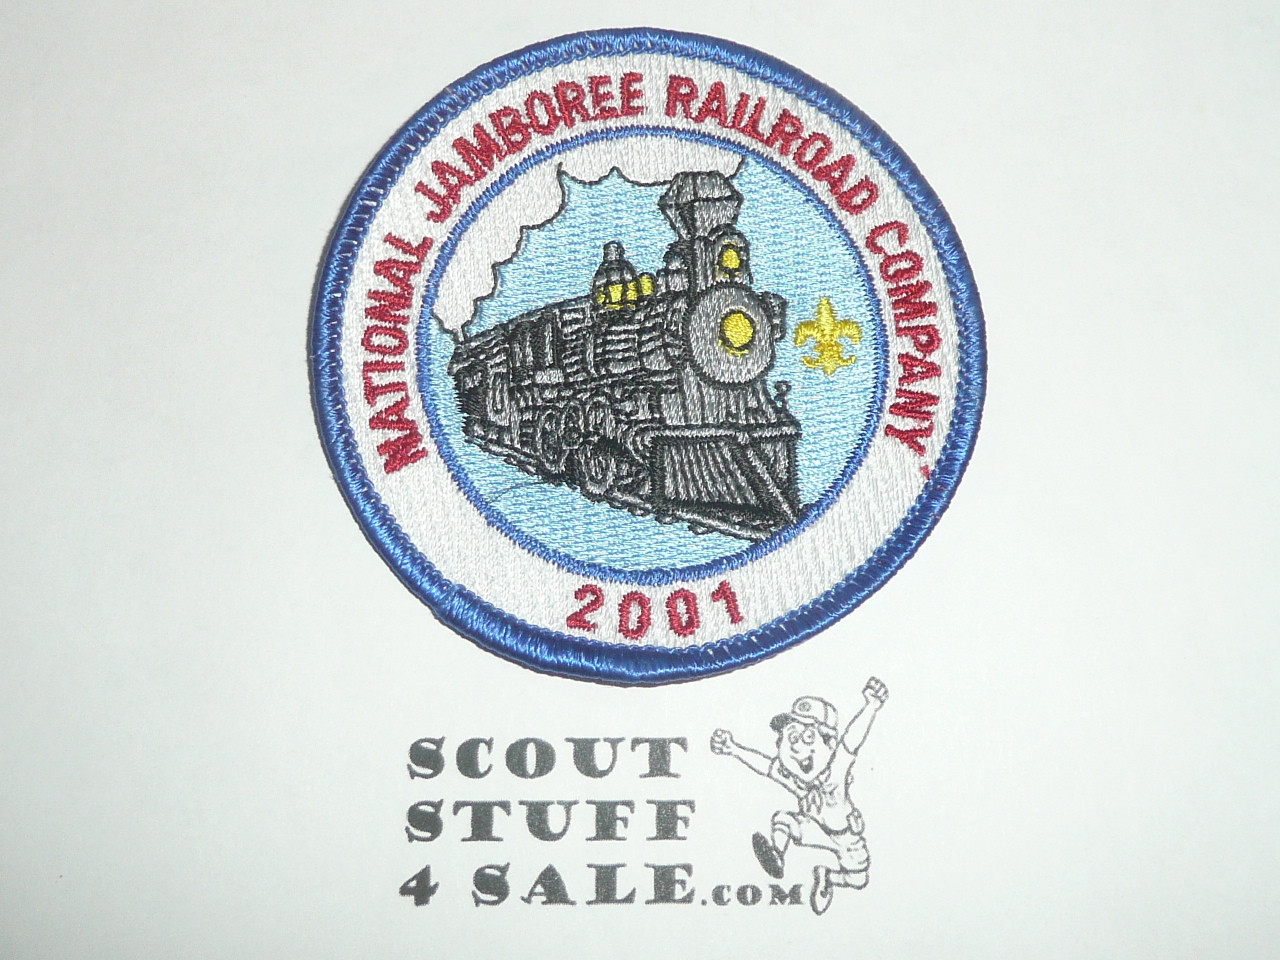 2001 National Jamboree Railroad Company Patch